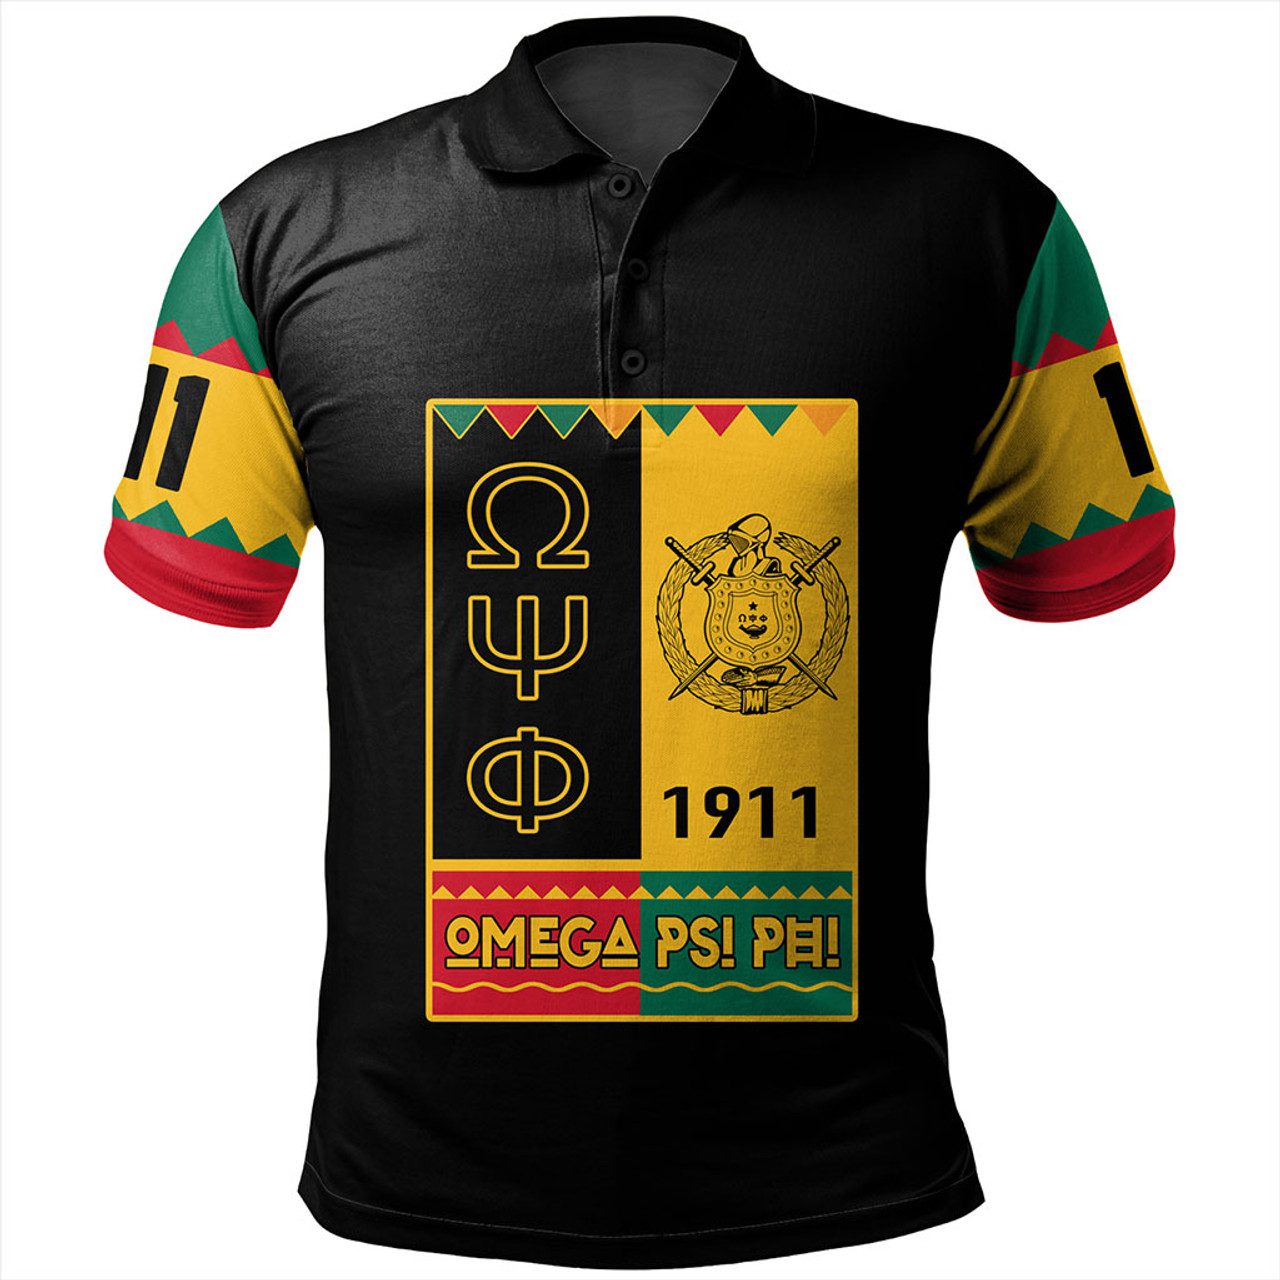 Omega Psi Phi Polo Shirt Black History Month